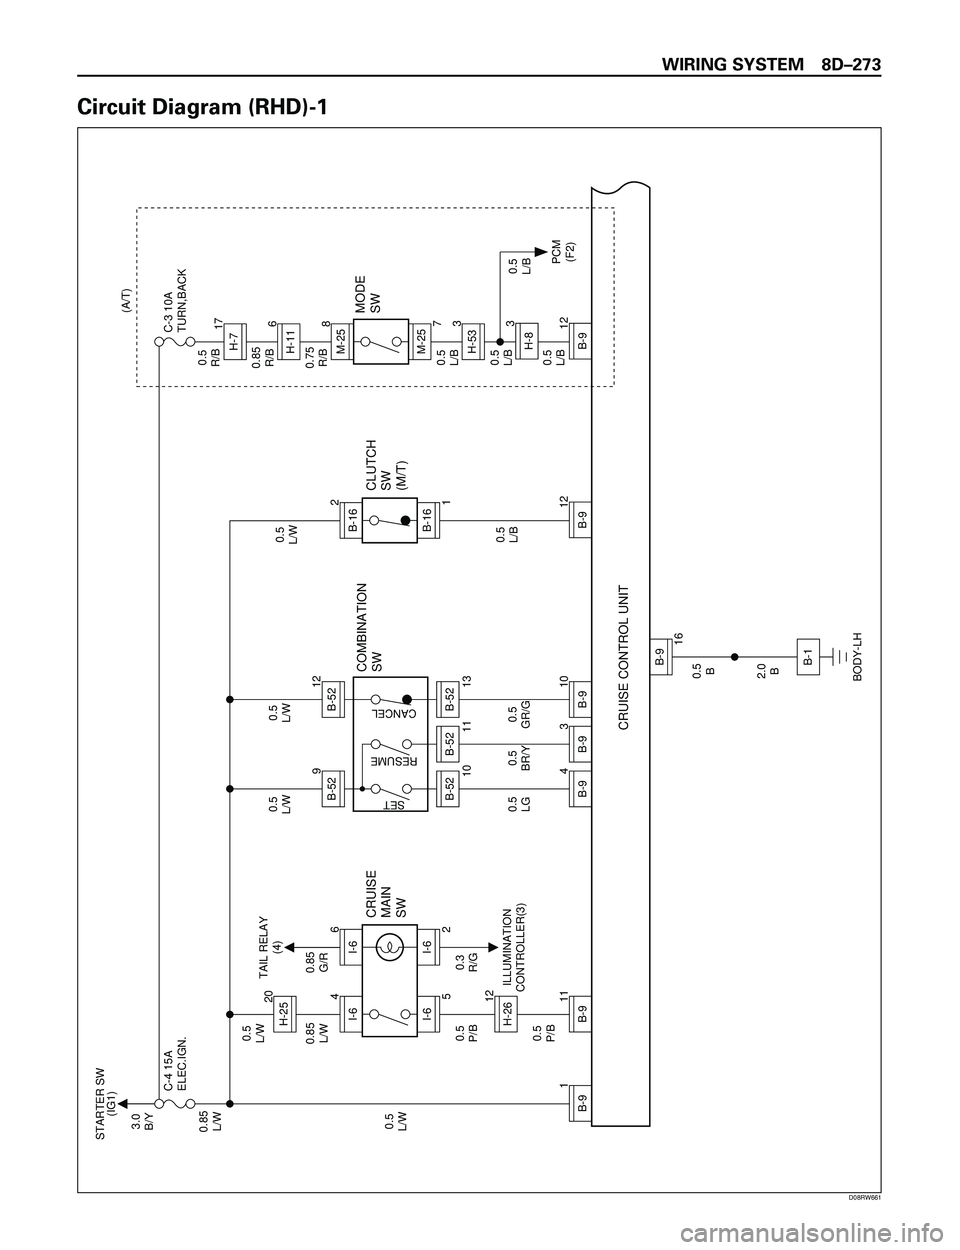 ISUZU TROOPER 1998  Service Owners Guide WIRING SYSTEM 8DÐ273
Circuit Diagram (RHD)-1
5
I-6
11
12
H-26
0.5
L/W0.5
L/W0.5
L/W0.5
R/B
0.85
R/B
0.75
R/B
0.5
L/B
0.5
L/B
0.5
L/B
0.5
L/B(A/T)
0.5
L/B 0.5
LG0.5
BR/Y0.5
GR/G
0.5
B
2.0
B 3.0
B/Y
0.